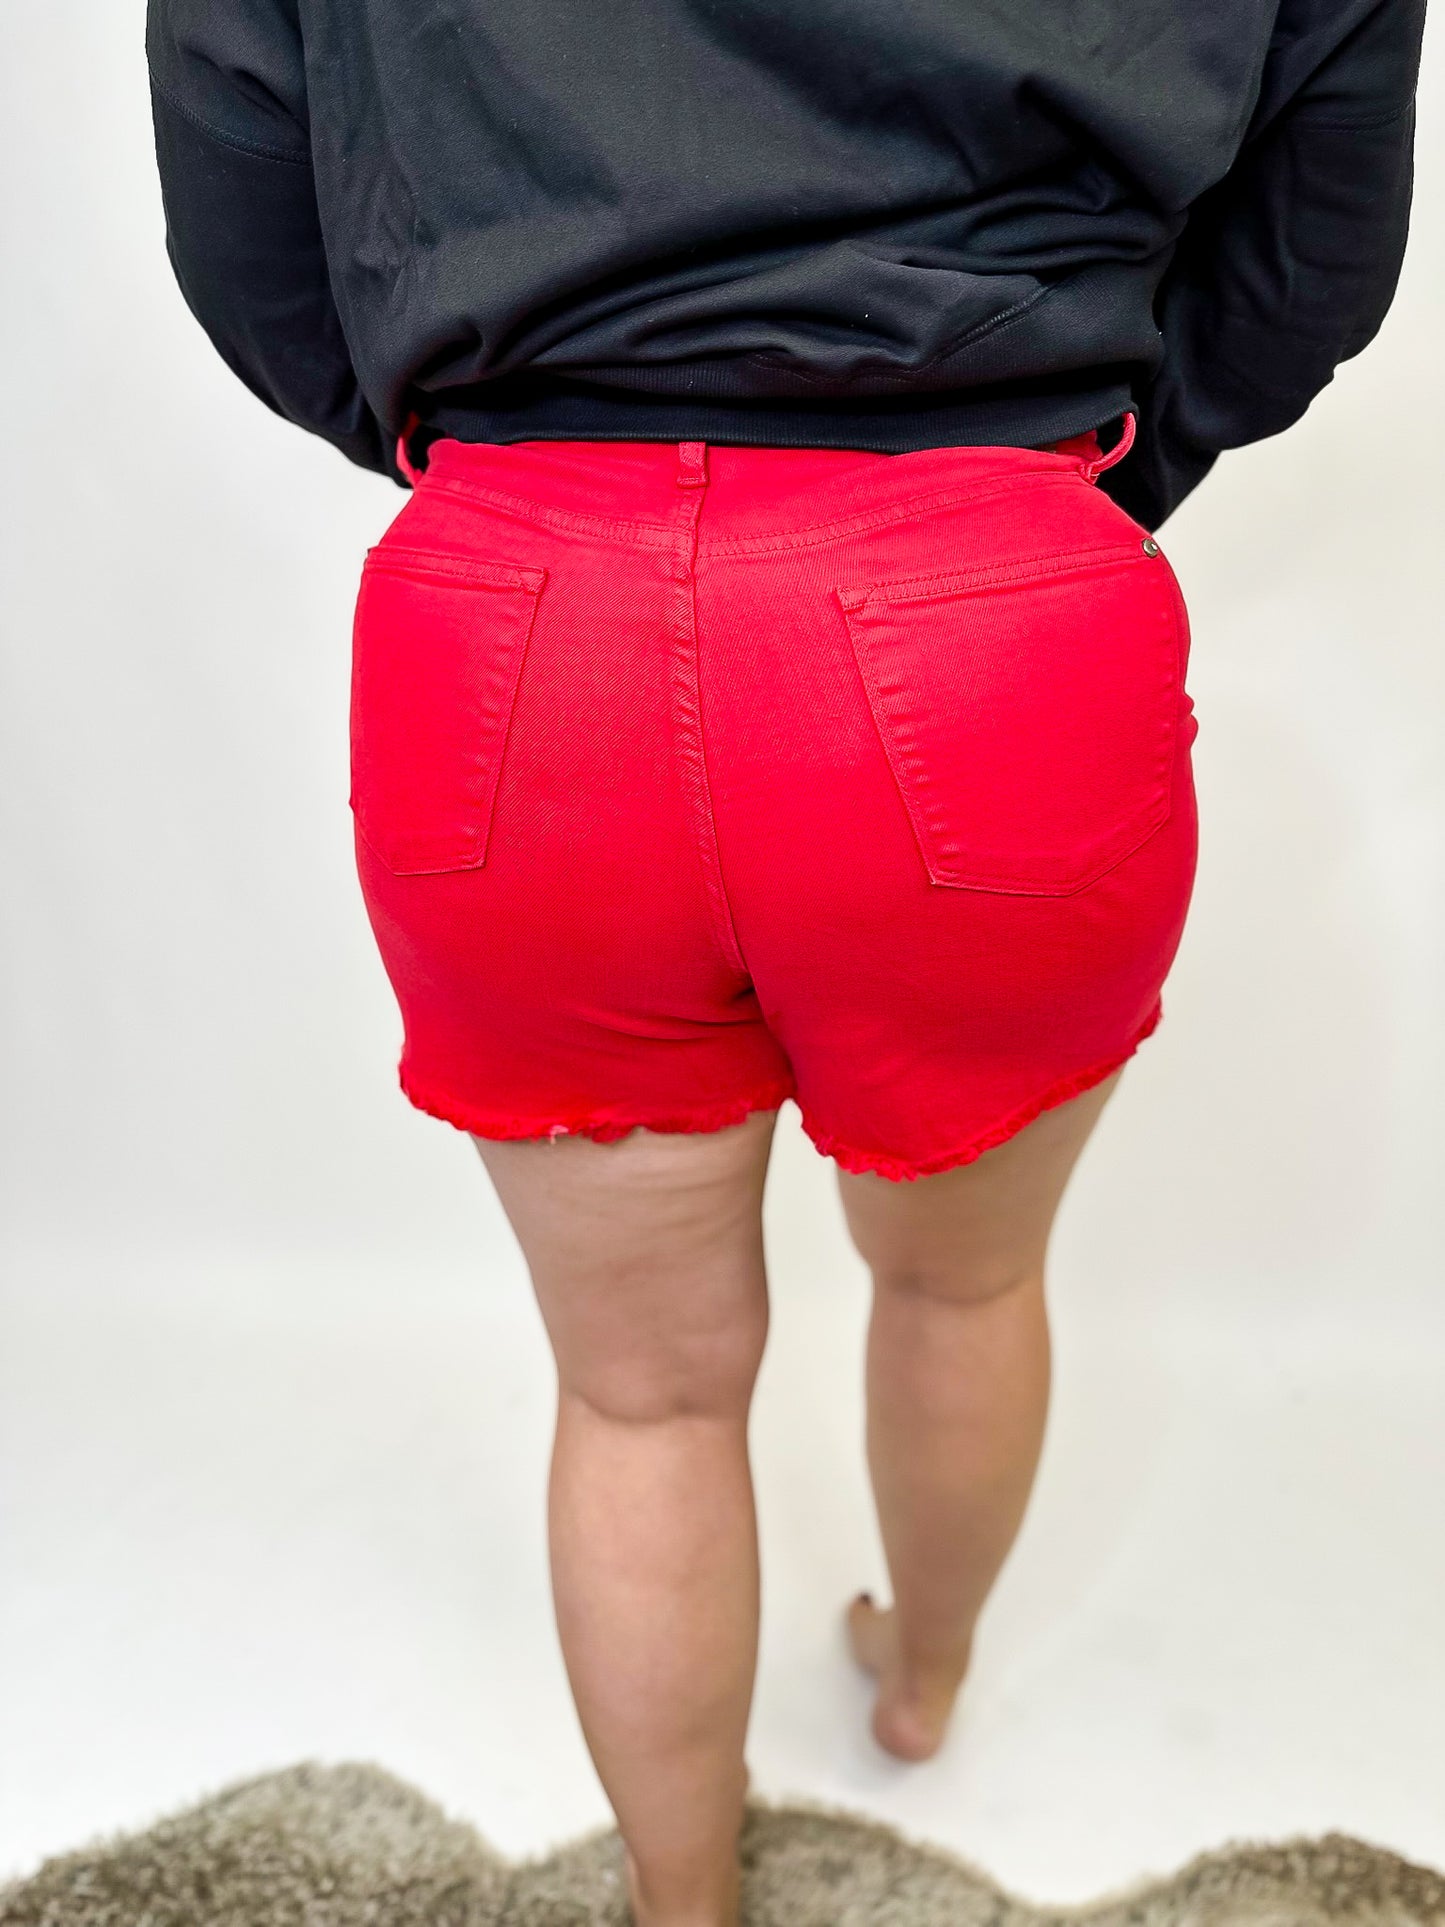 Judy Blue Red Hot Shorts Reg/Curvy